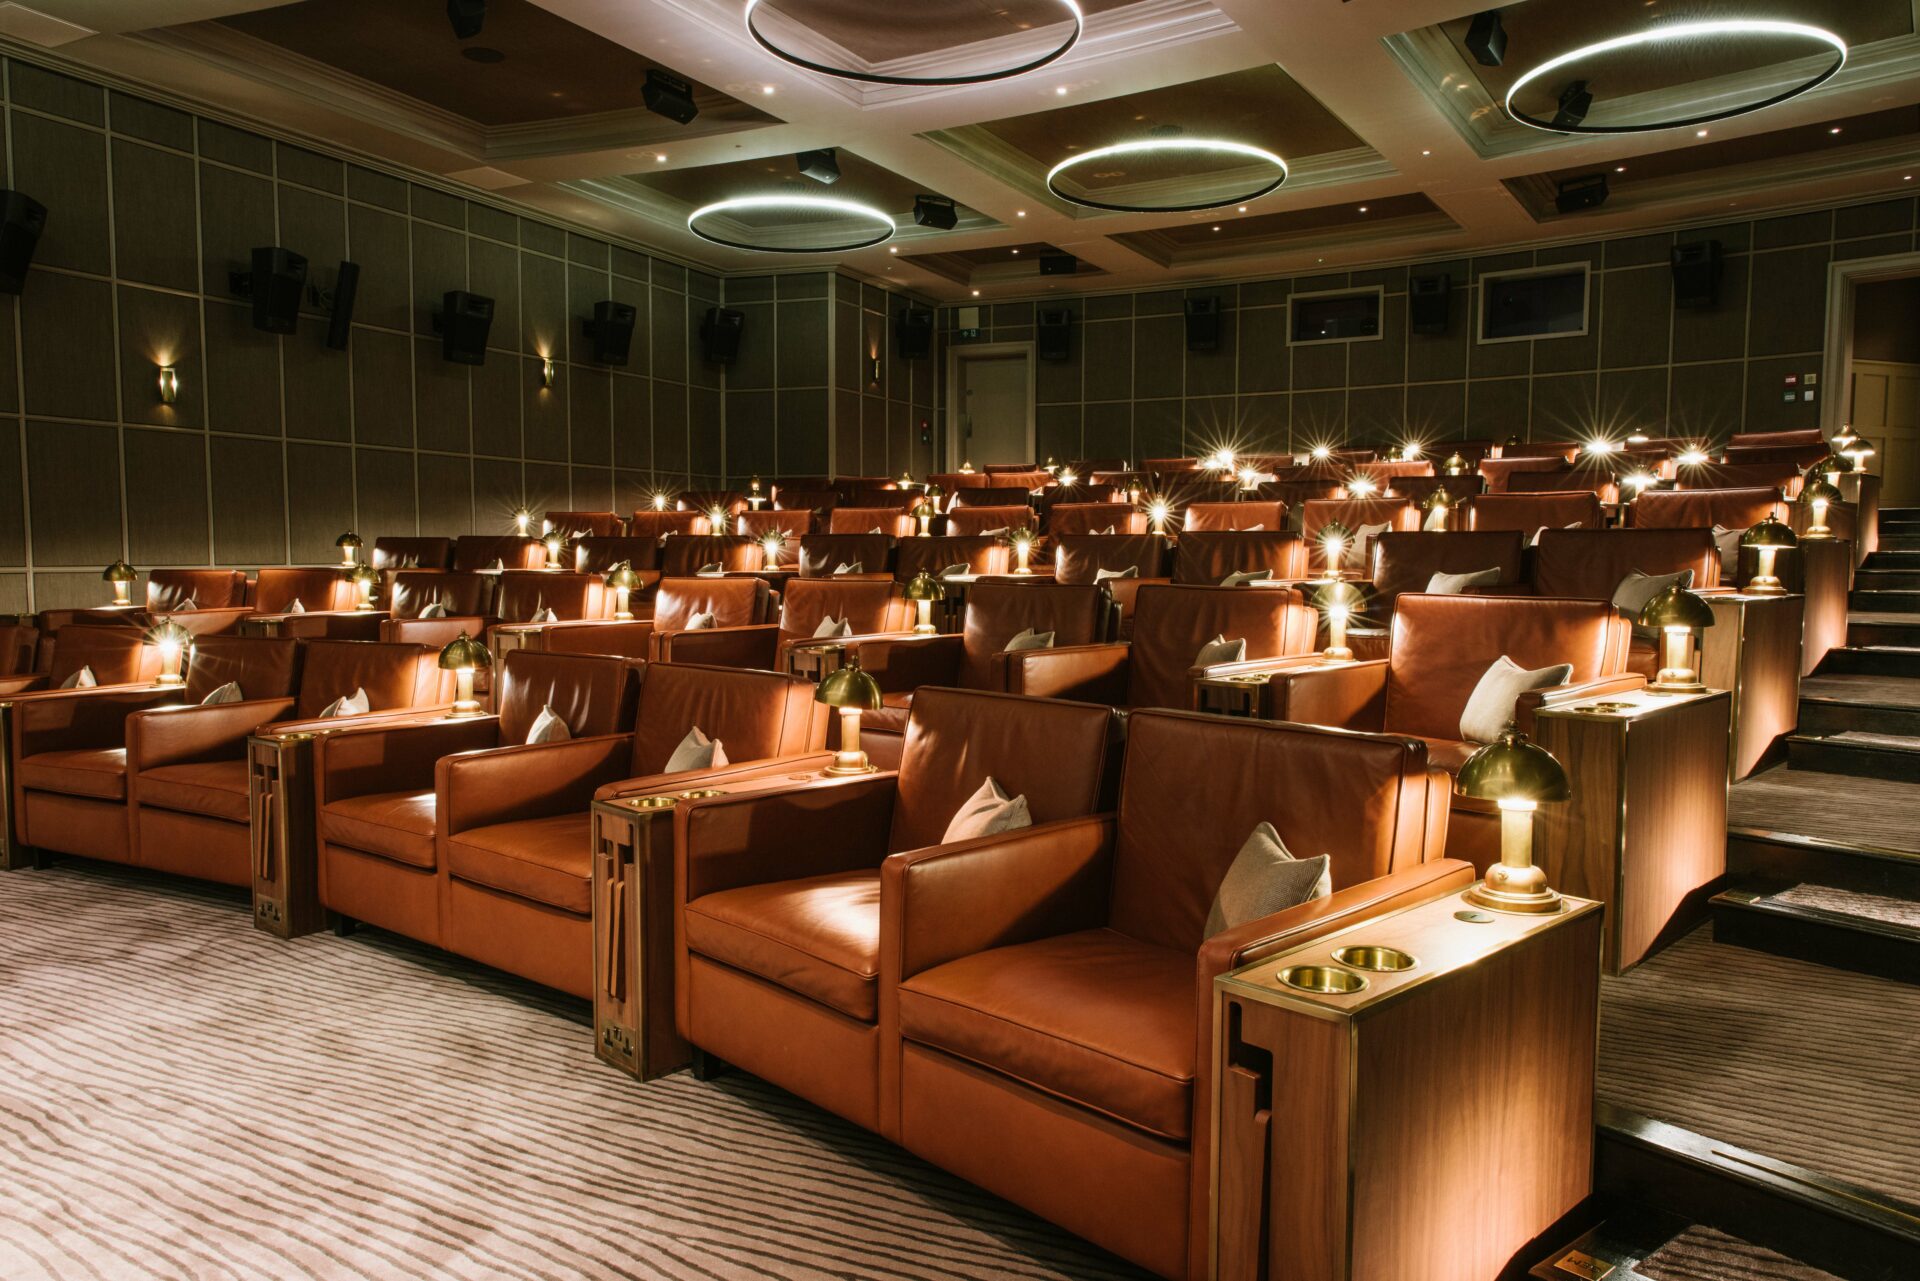 Luxury cinema room dimly lit with uplighting